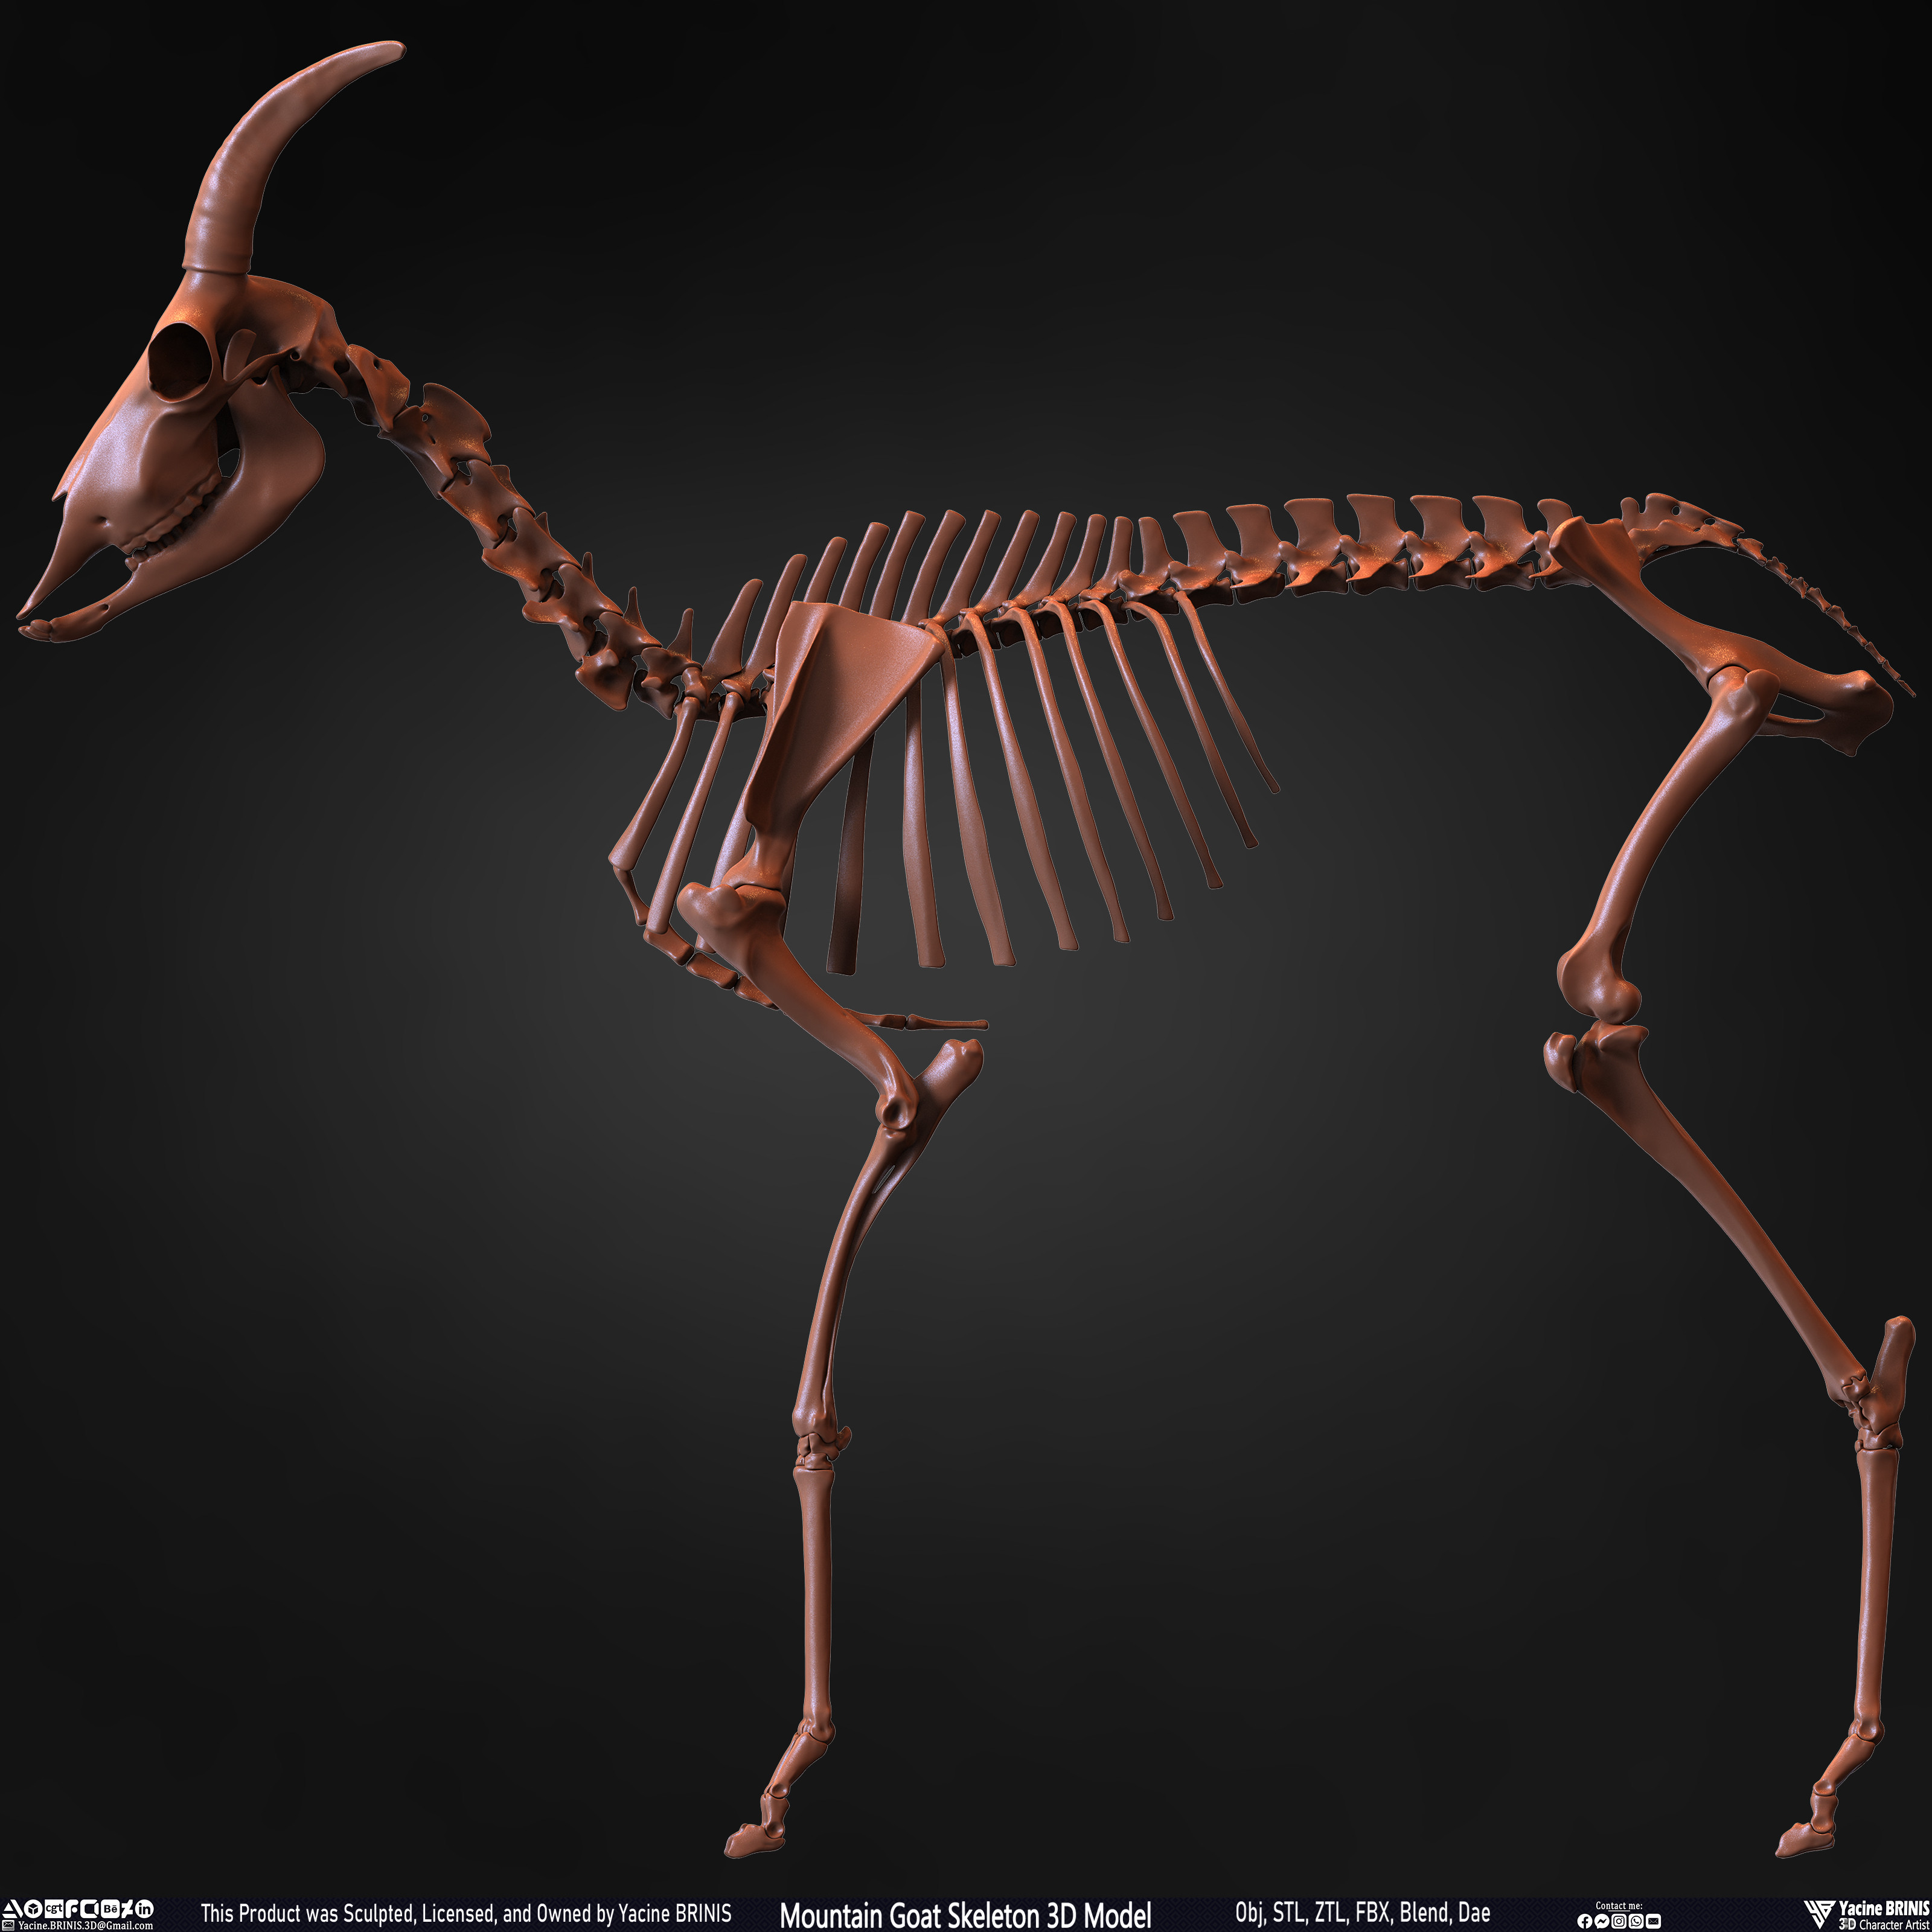 Mountain Goat Skeleton 3D Model Sculpted by Yacine BRINIS Set 011